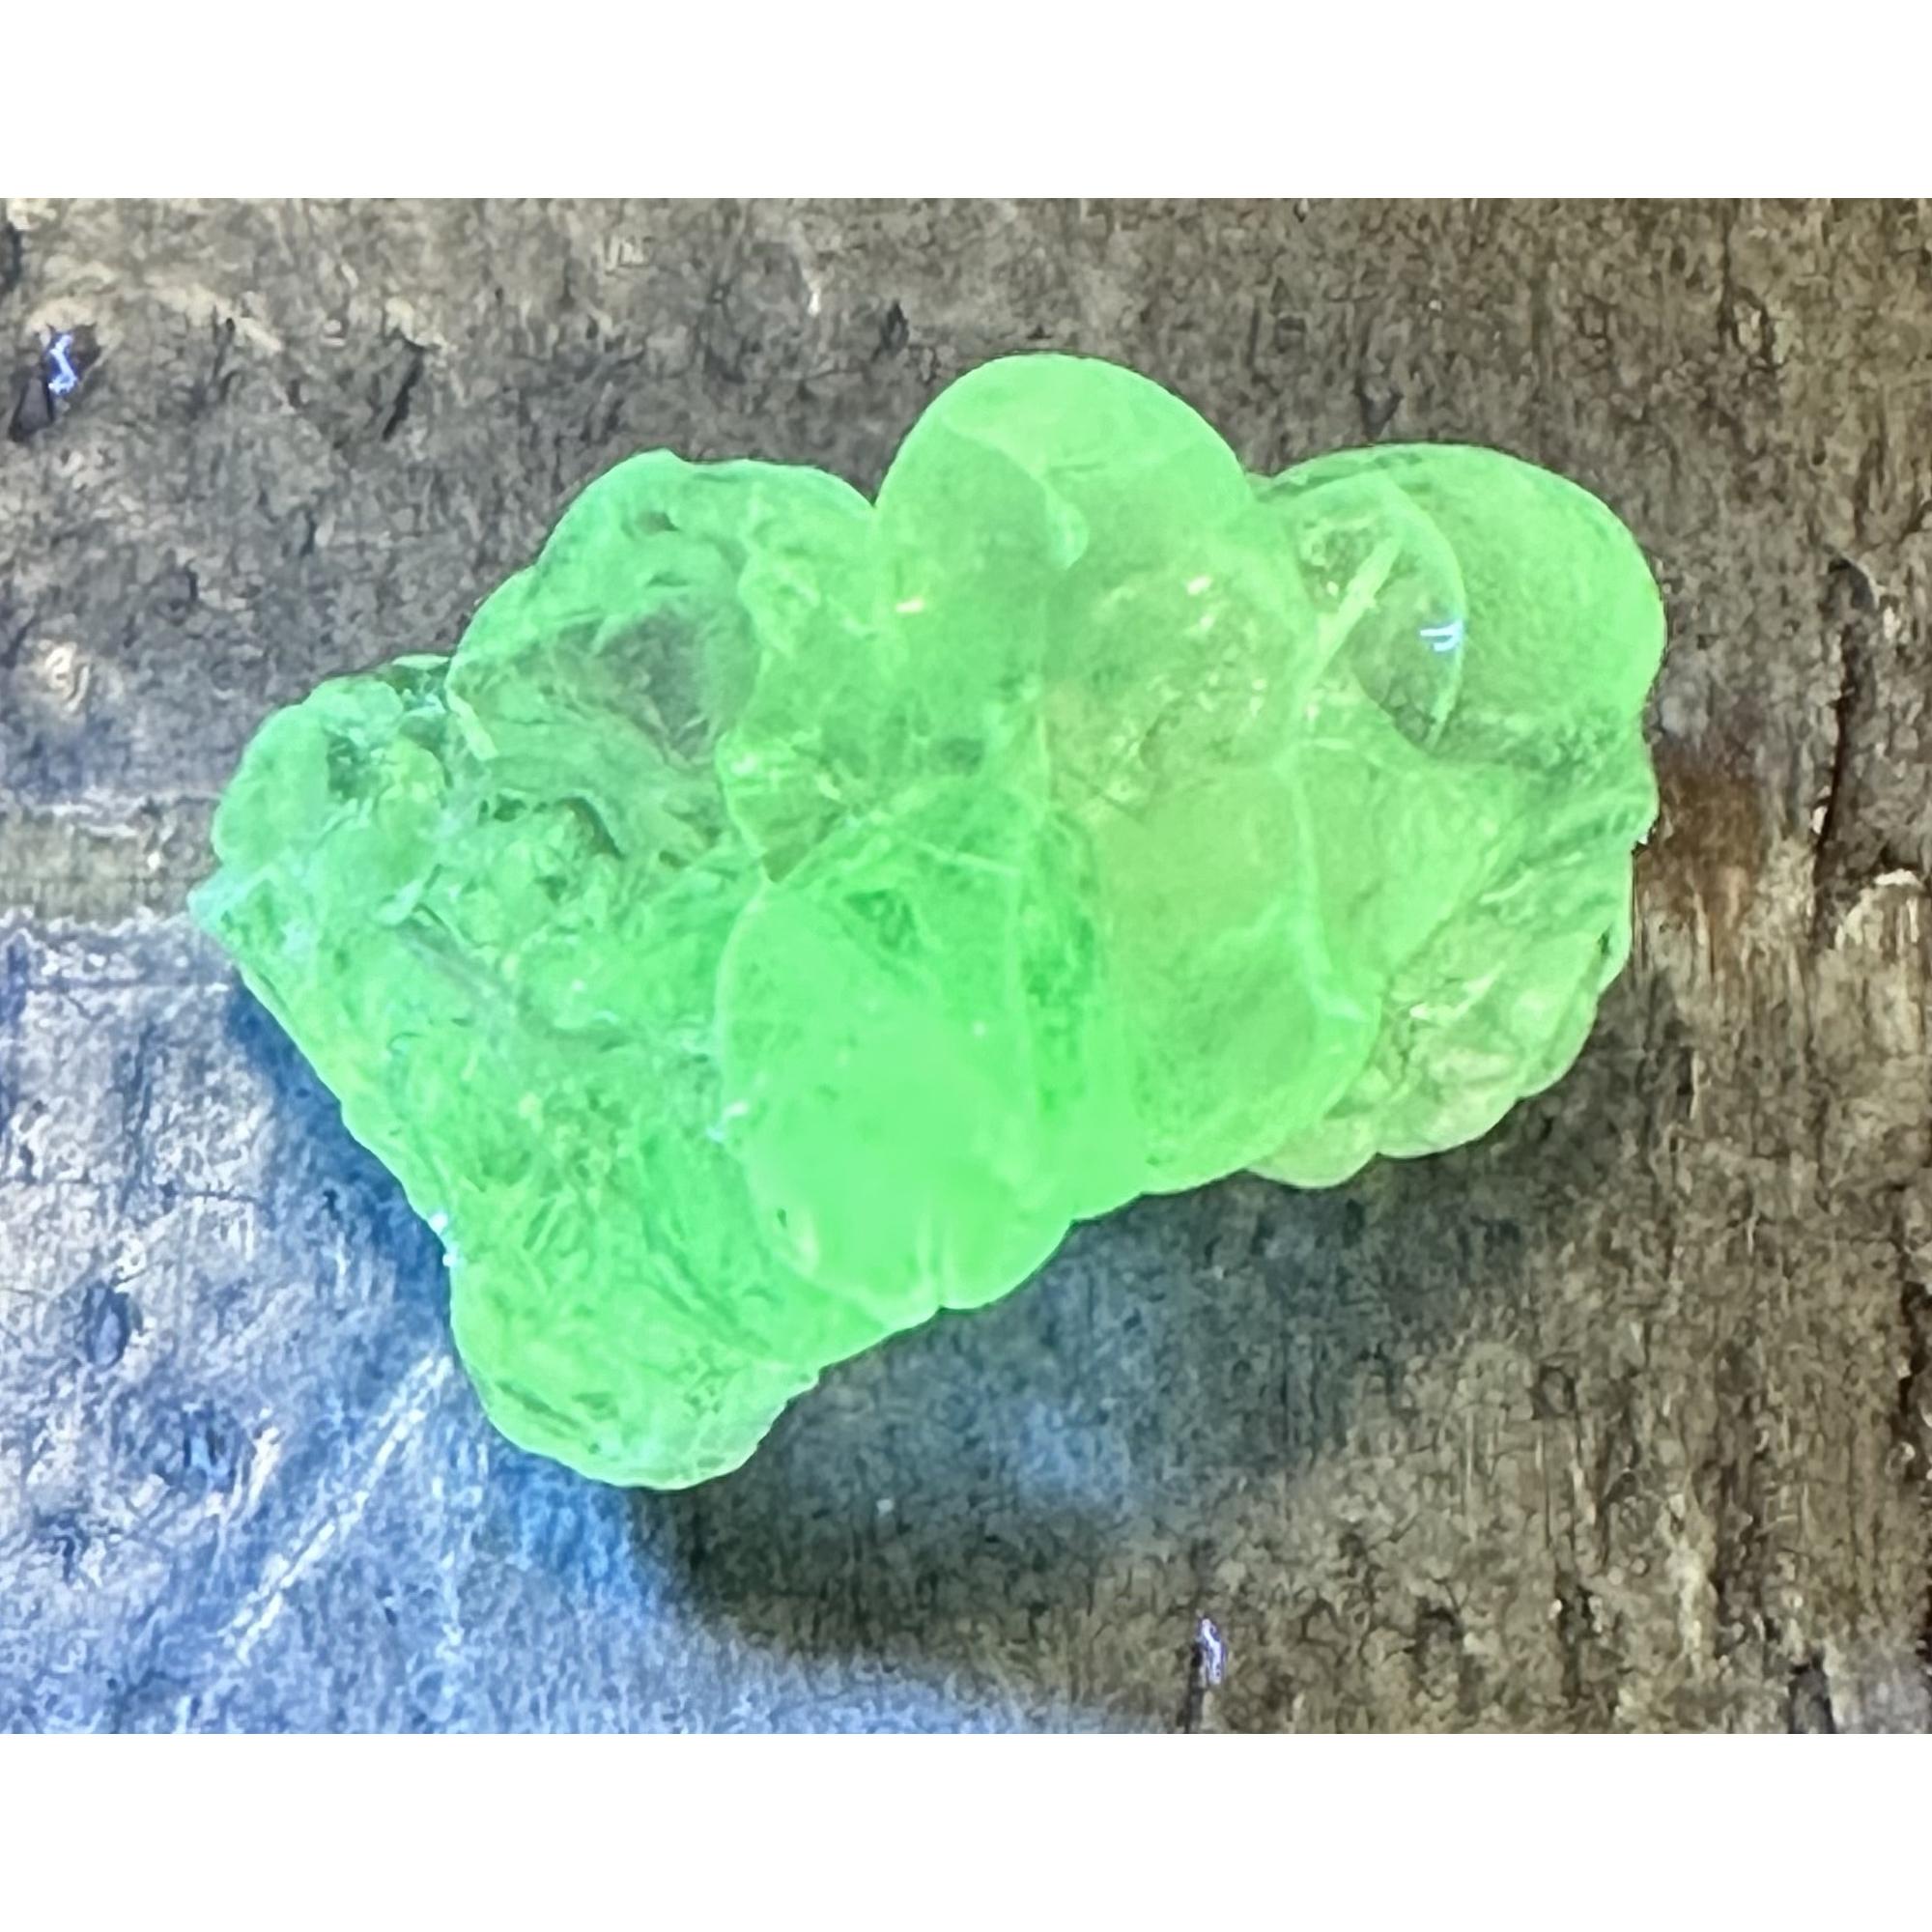 Opal, Hyalite, uv reactive, 2.46 grams, Mexico Prehistoric Online